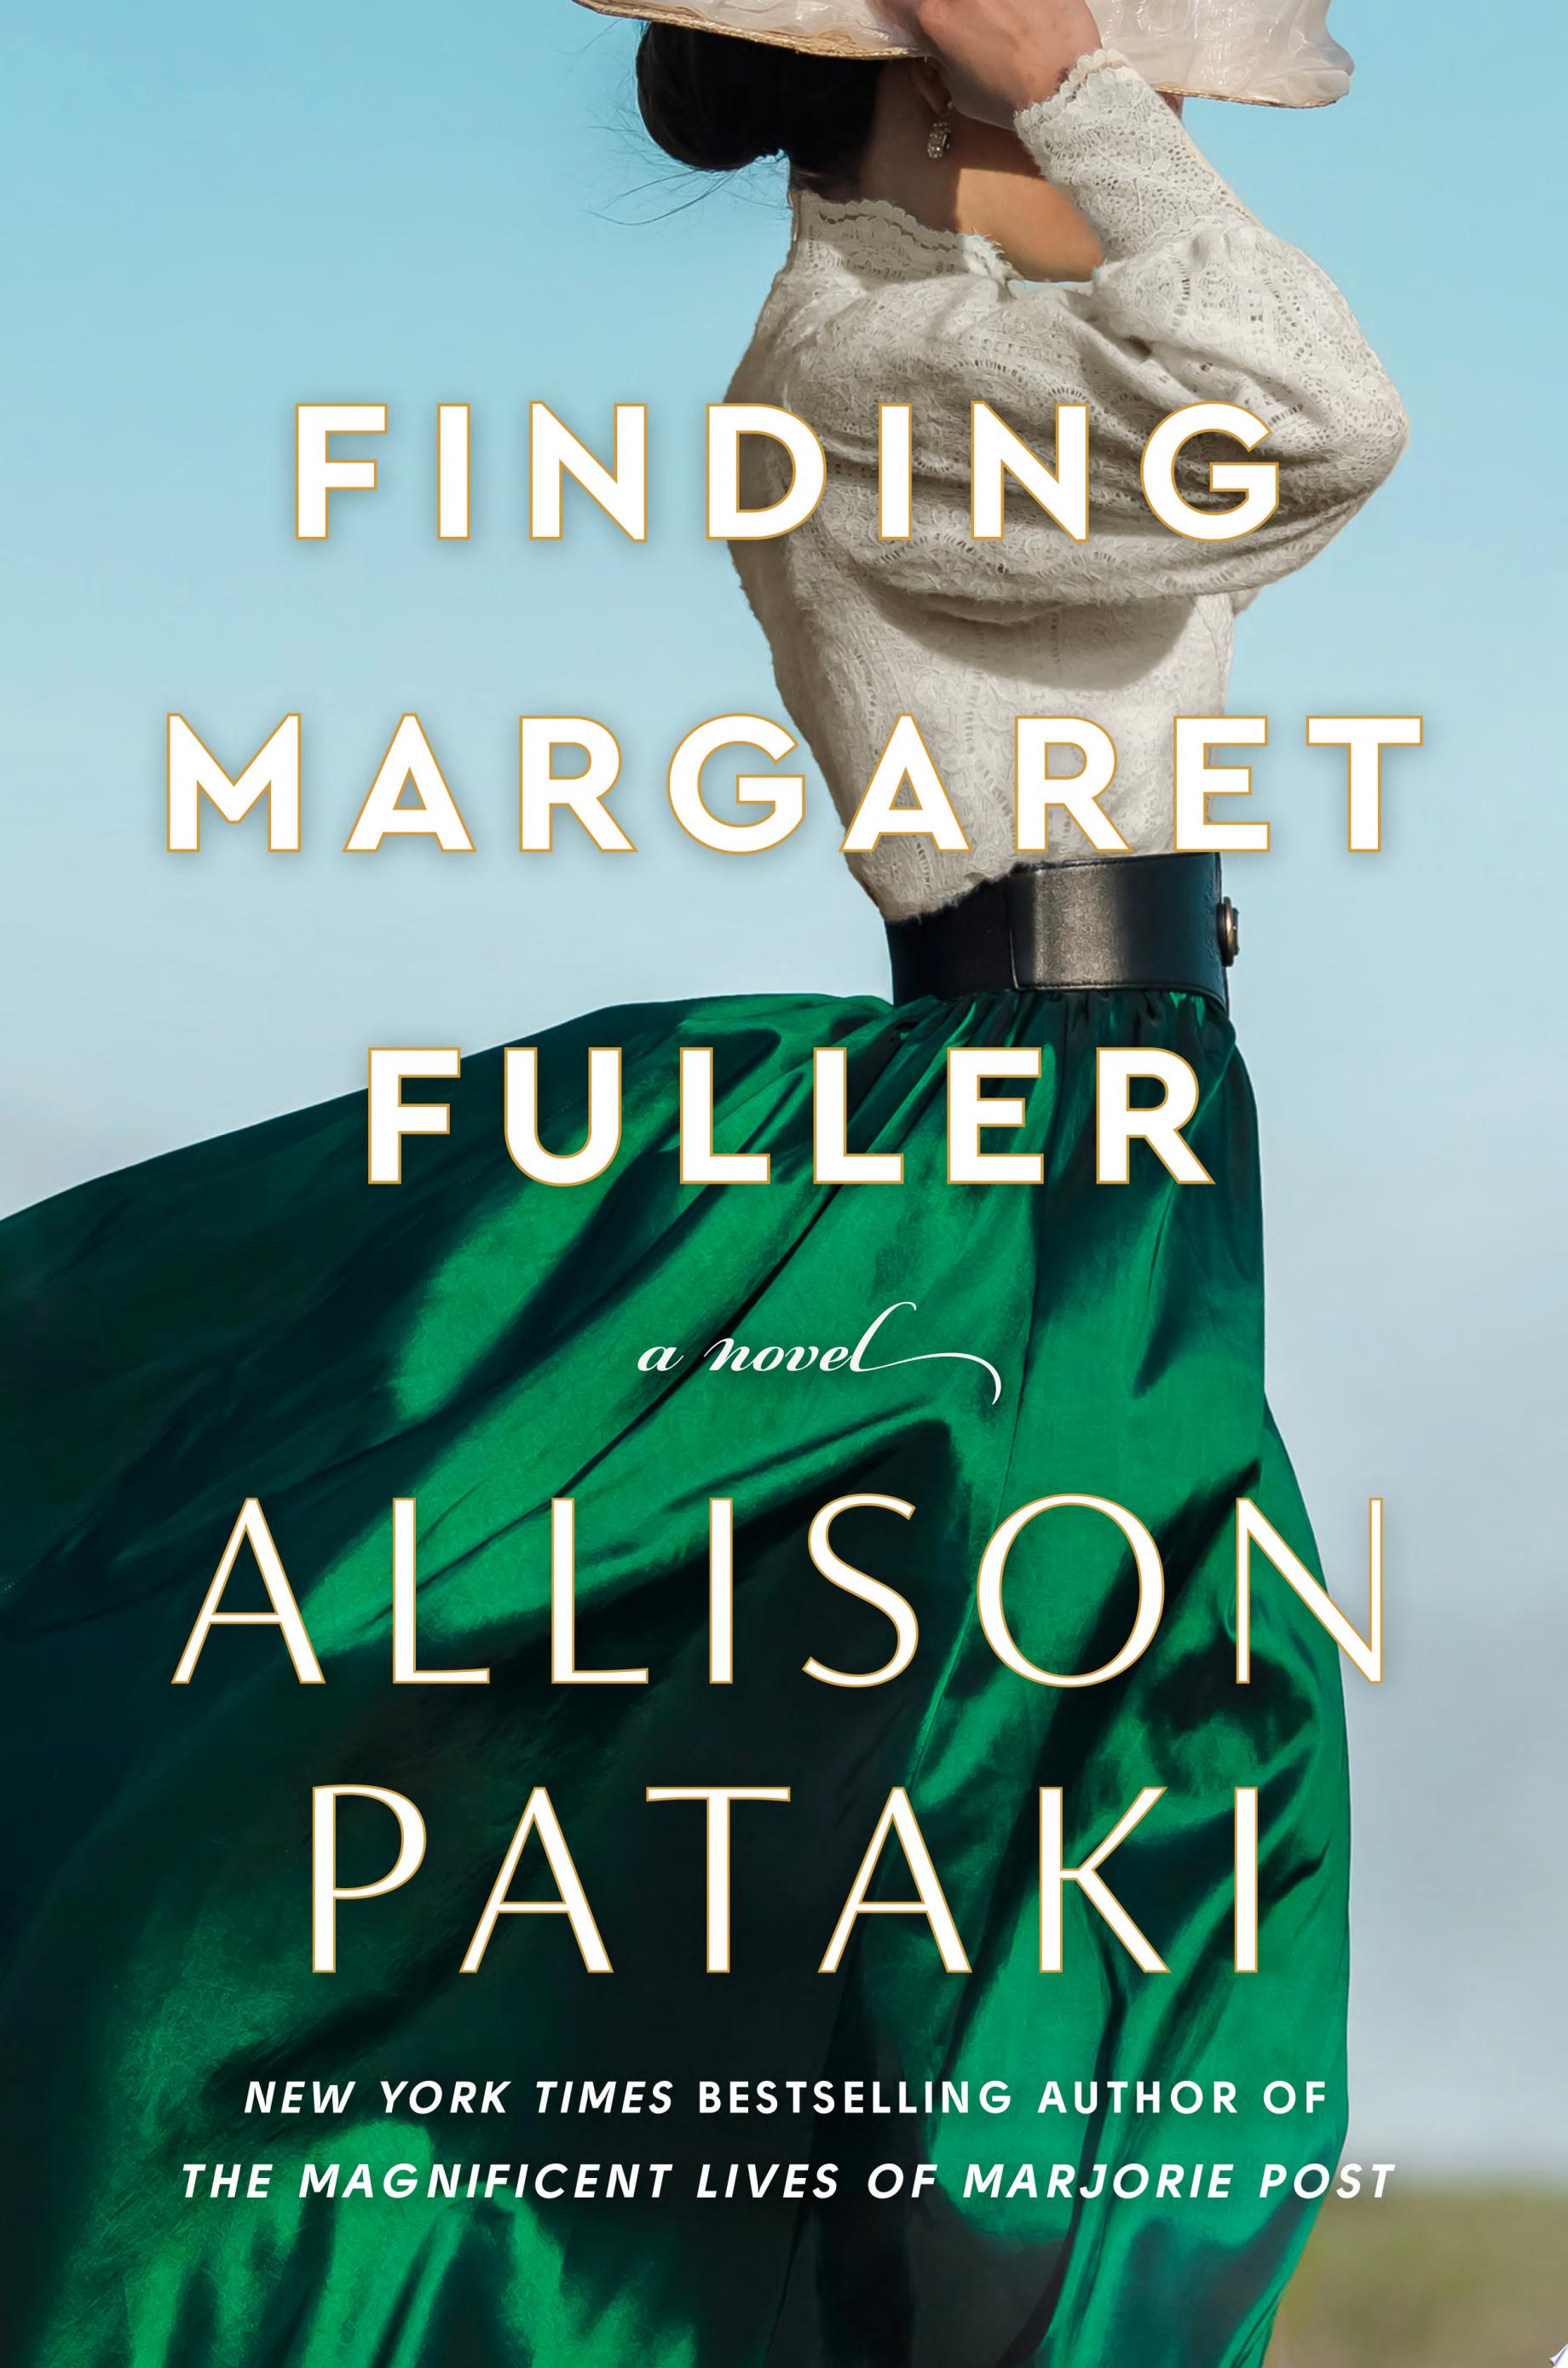 Image for "Finding Margaret Fuller"